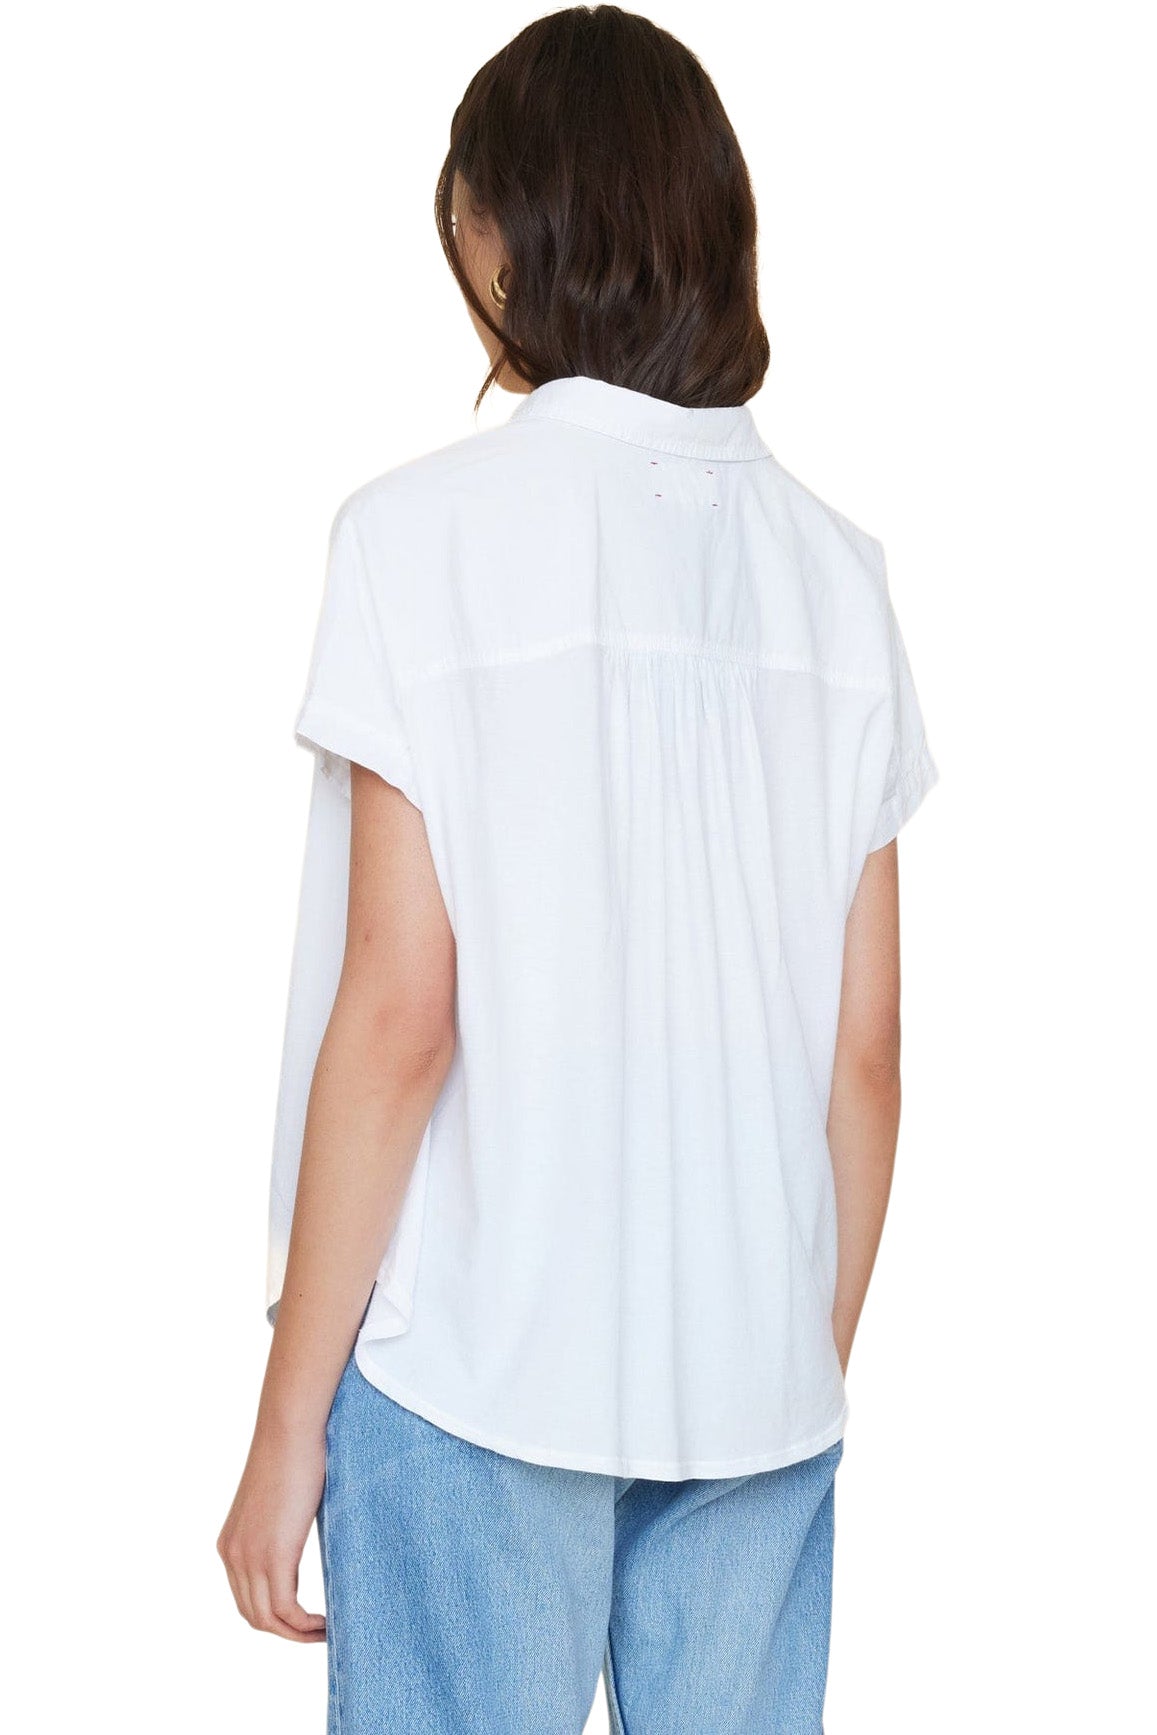 Xirena Pax Shirt in White